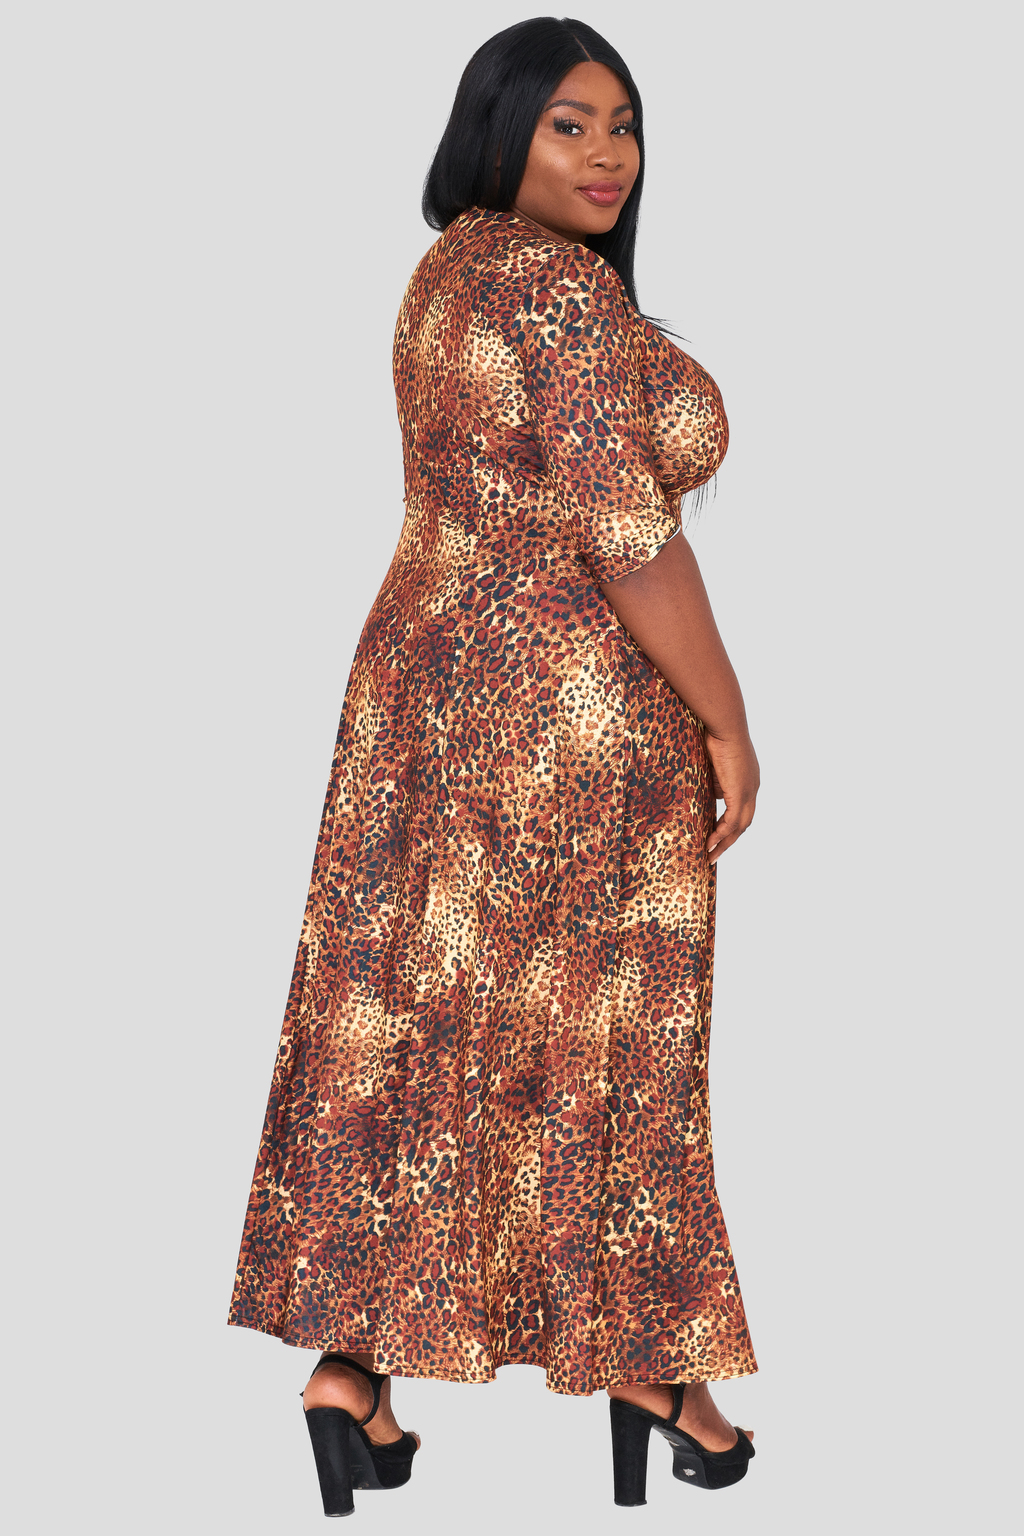 Leopard print maxi dress plus size clothing - Fashion Book